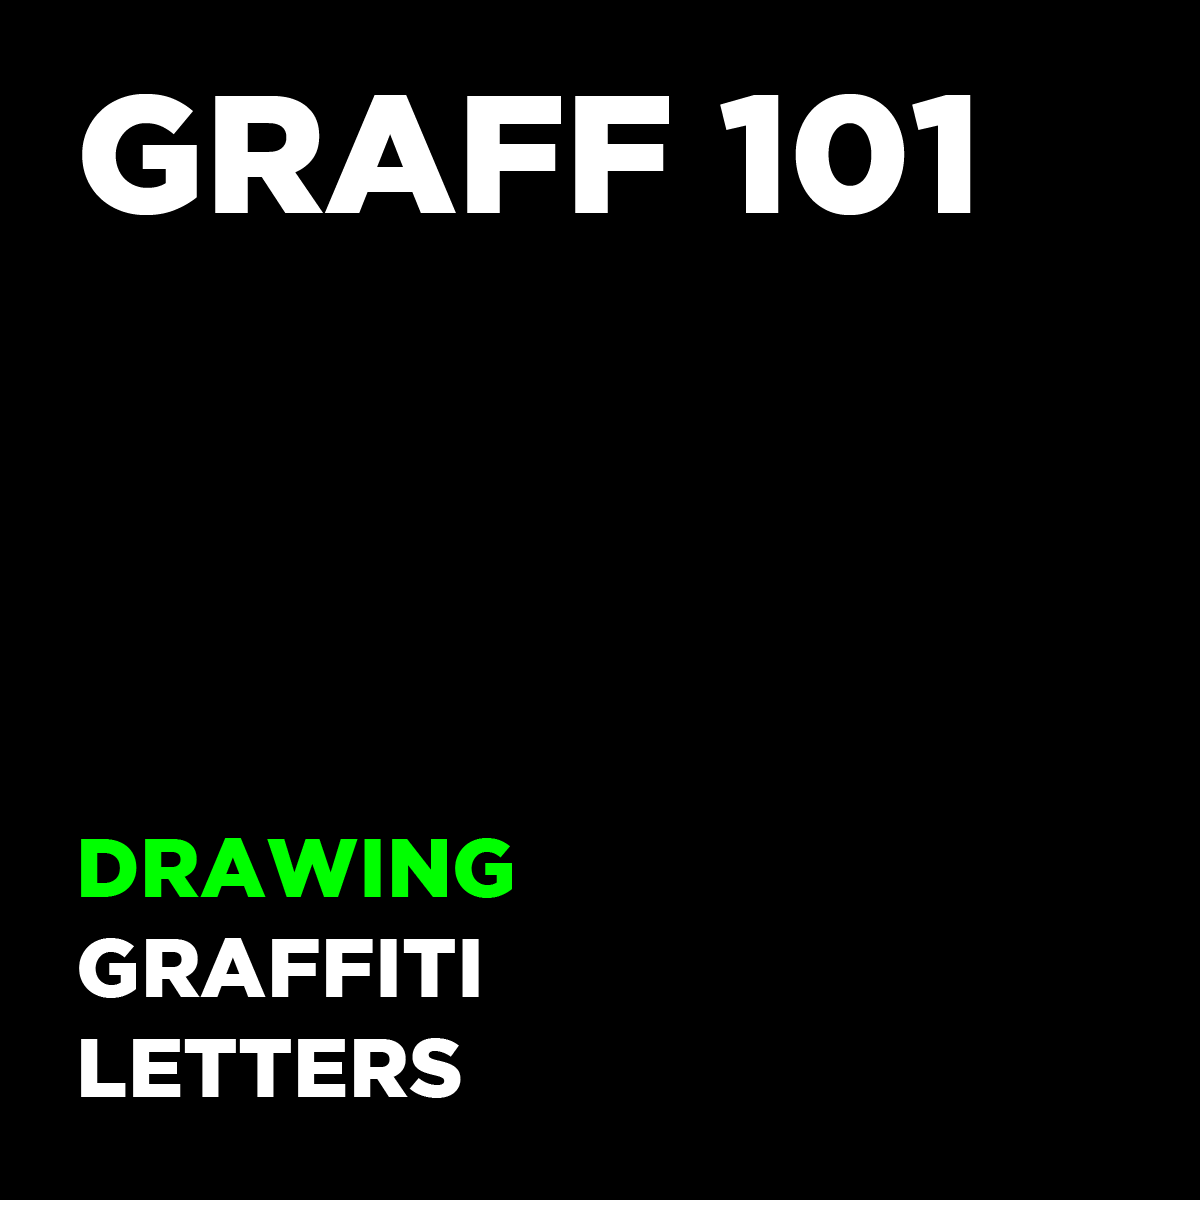 How to draw graffiti letters. Graff 101